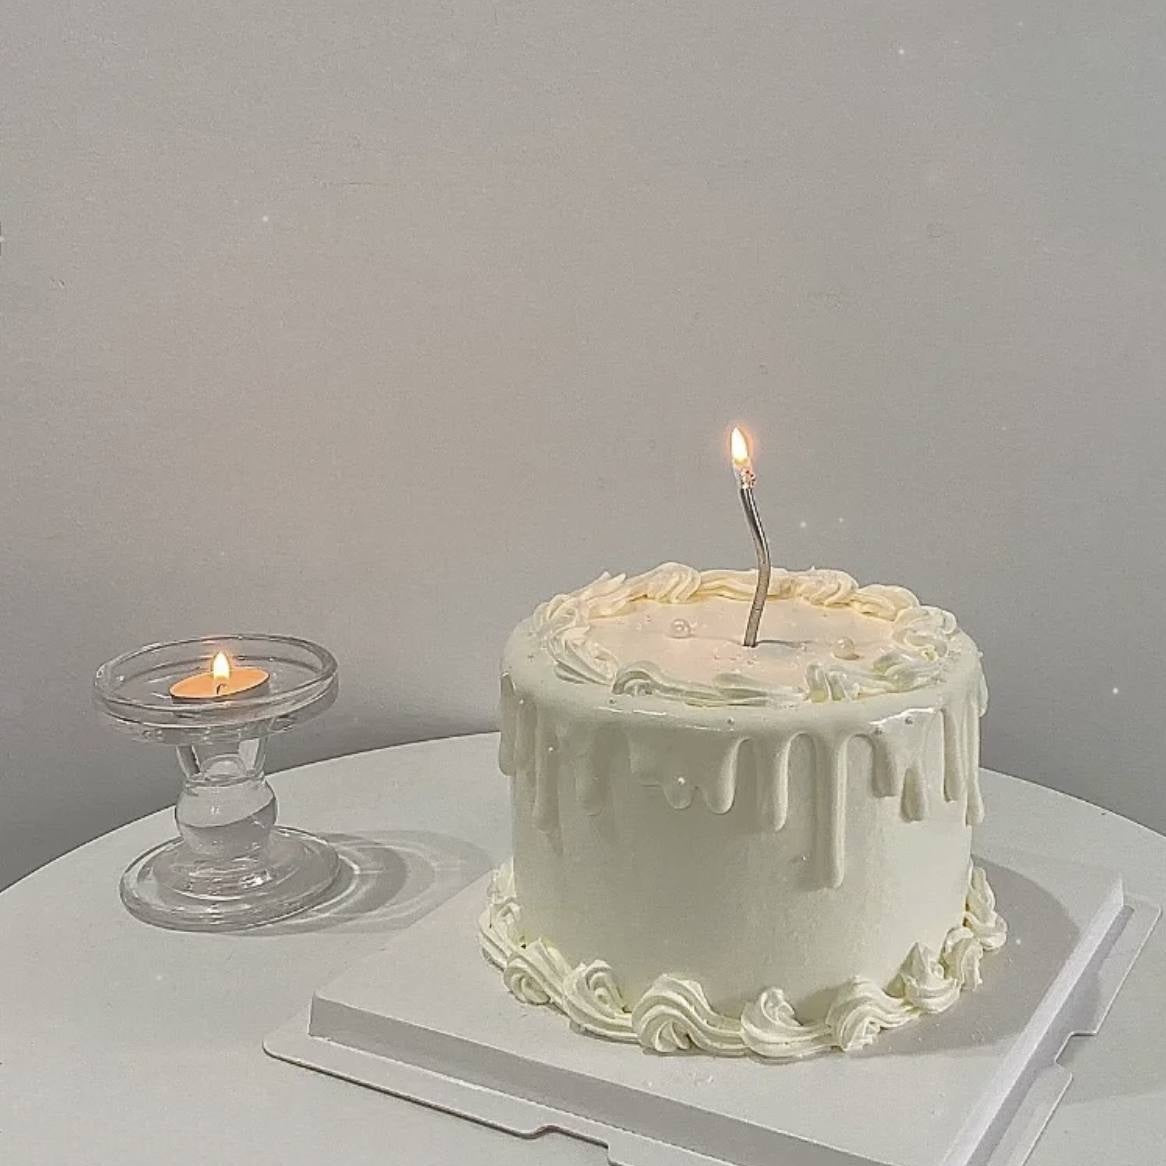 all white birthday cake